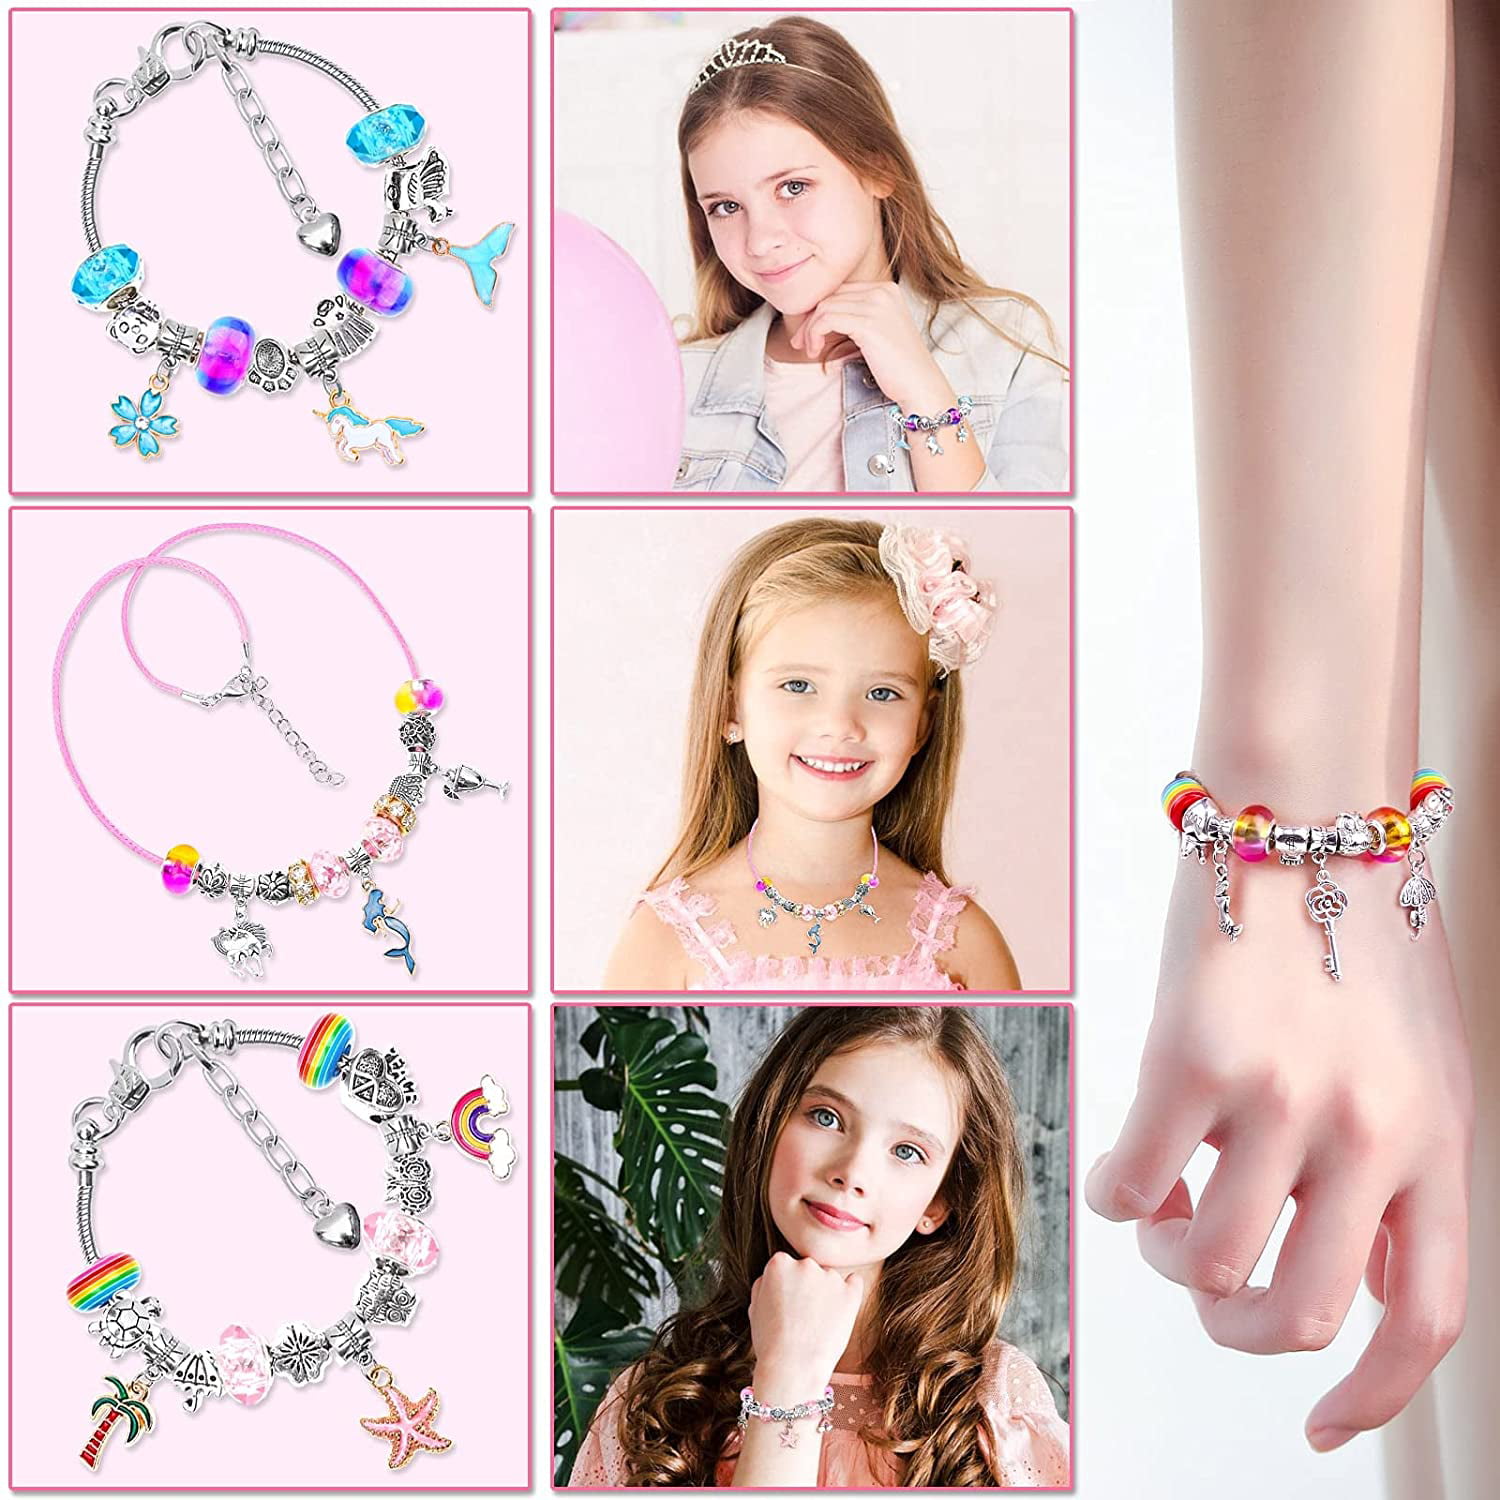  DIY Bracelet Making Kit for Girls, Thrilez 97Pcs Charm  Bracelets Kit with Beads, Pendant Charms, Bracelets and Necklace String for  Bracelets Craft & Necklace Making, Gift Idea for Teen Girls